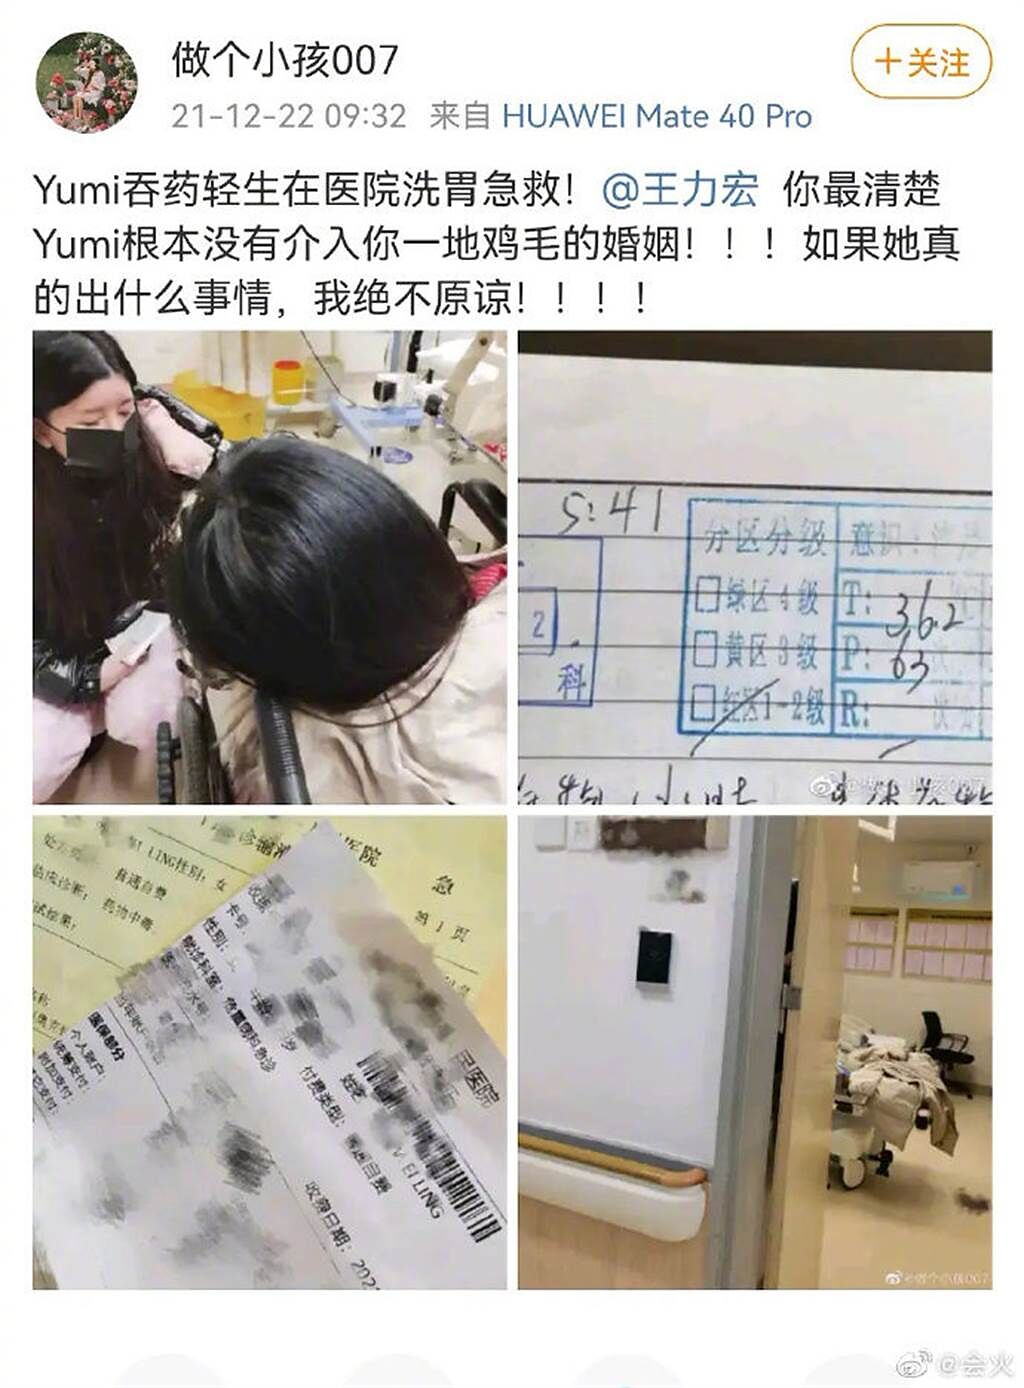 Yumi吞藥輕生，被送到醫院急救。（圖／翻攝自微博）